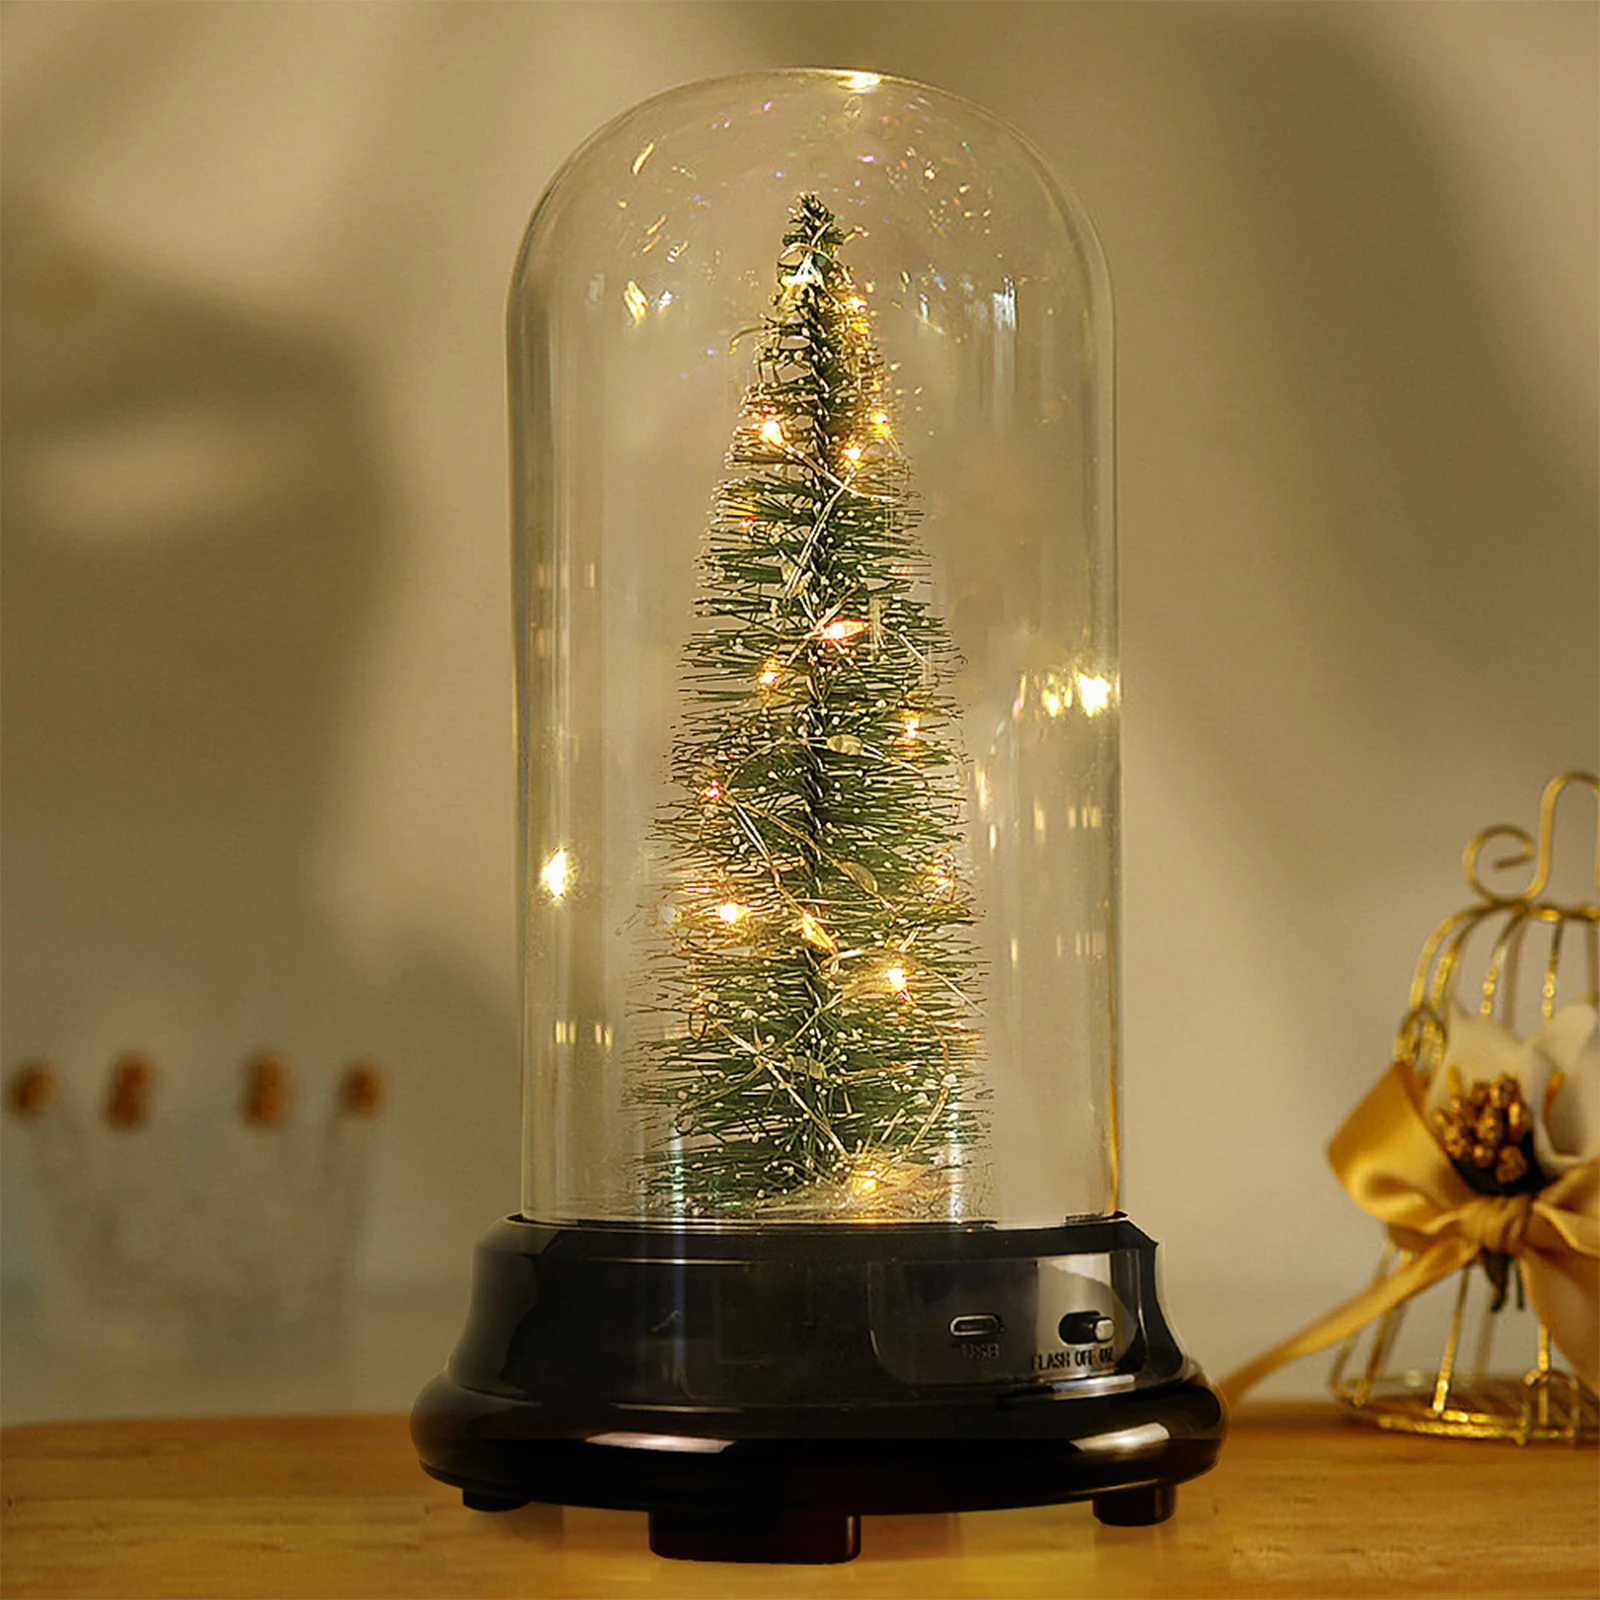 25cm Christmas Tree With LED Lights Ornaments Festival Table Decor Xmas Gift 